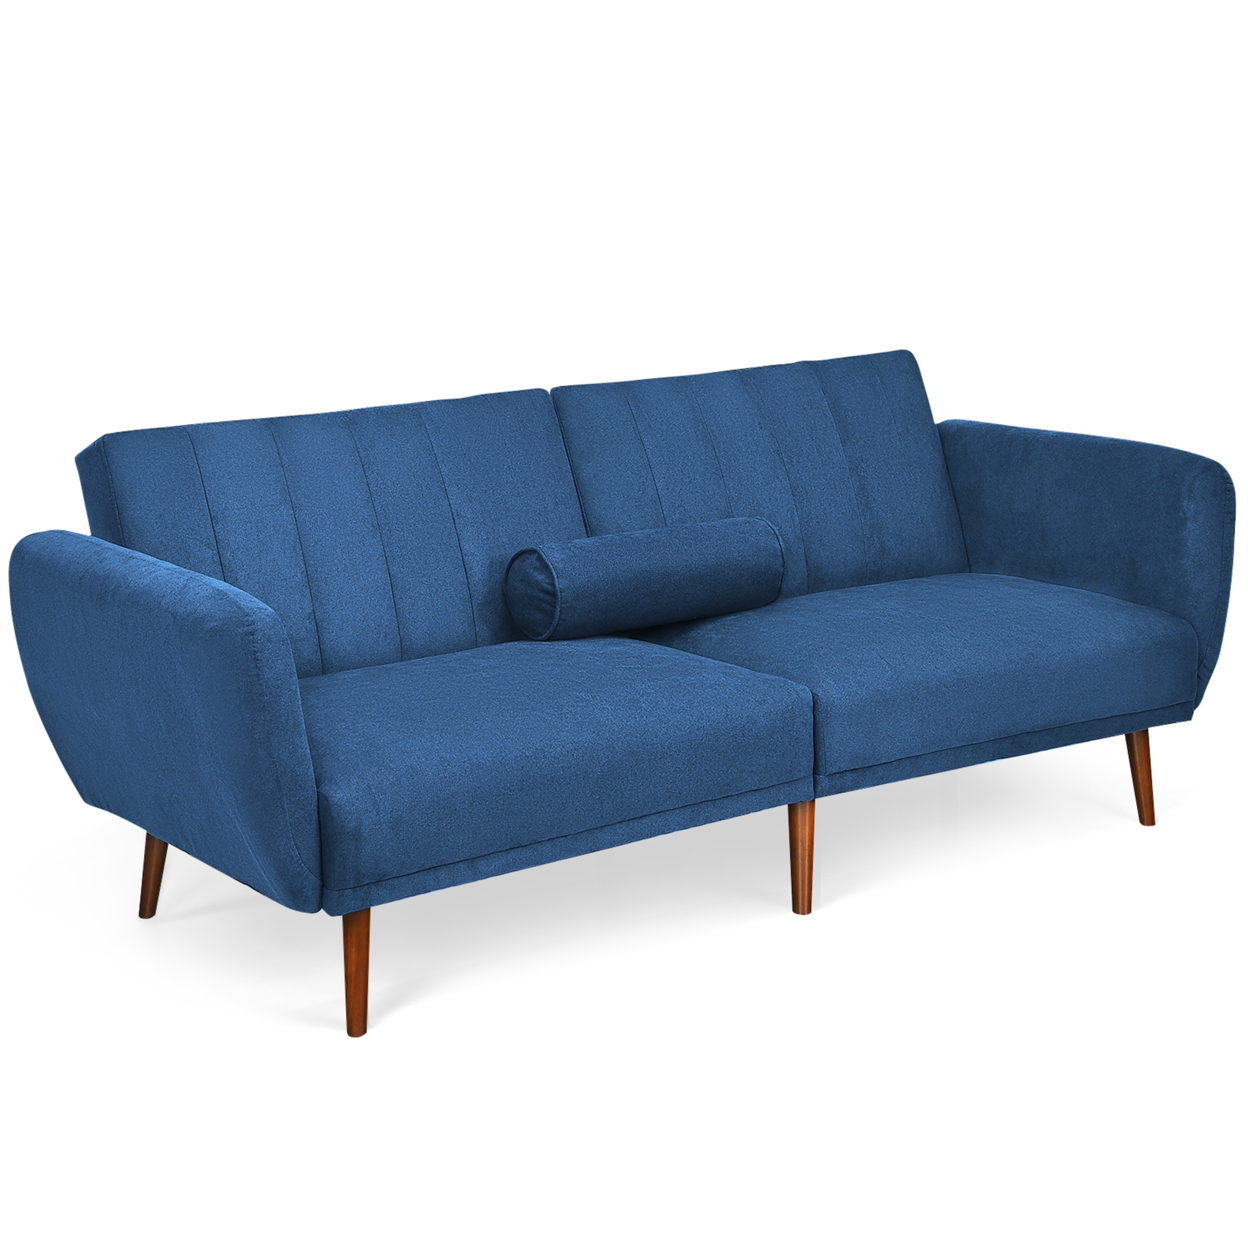 Modern Sofa Bed Convertible Futon Sofa W/ 3-Level Adjustable Angle Function - Navy